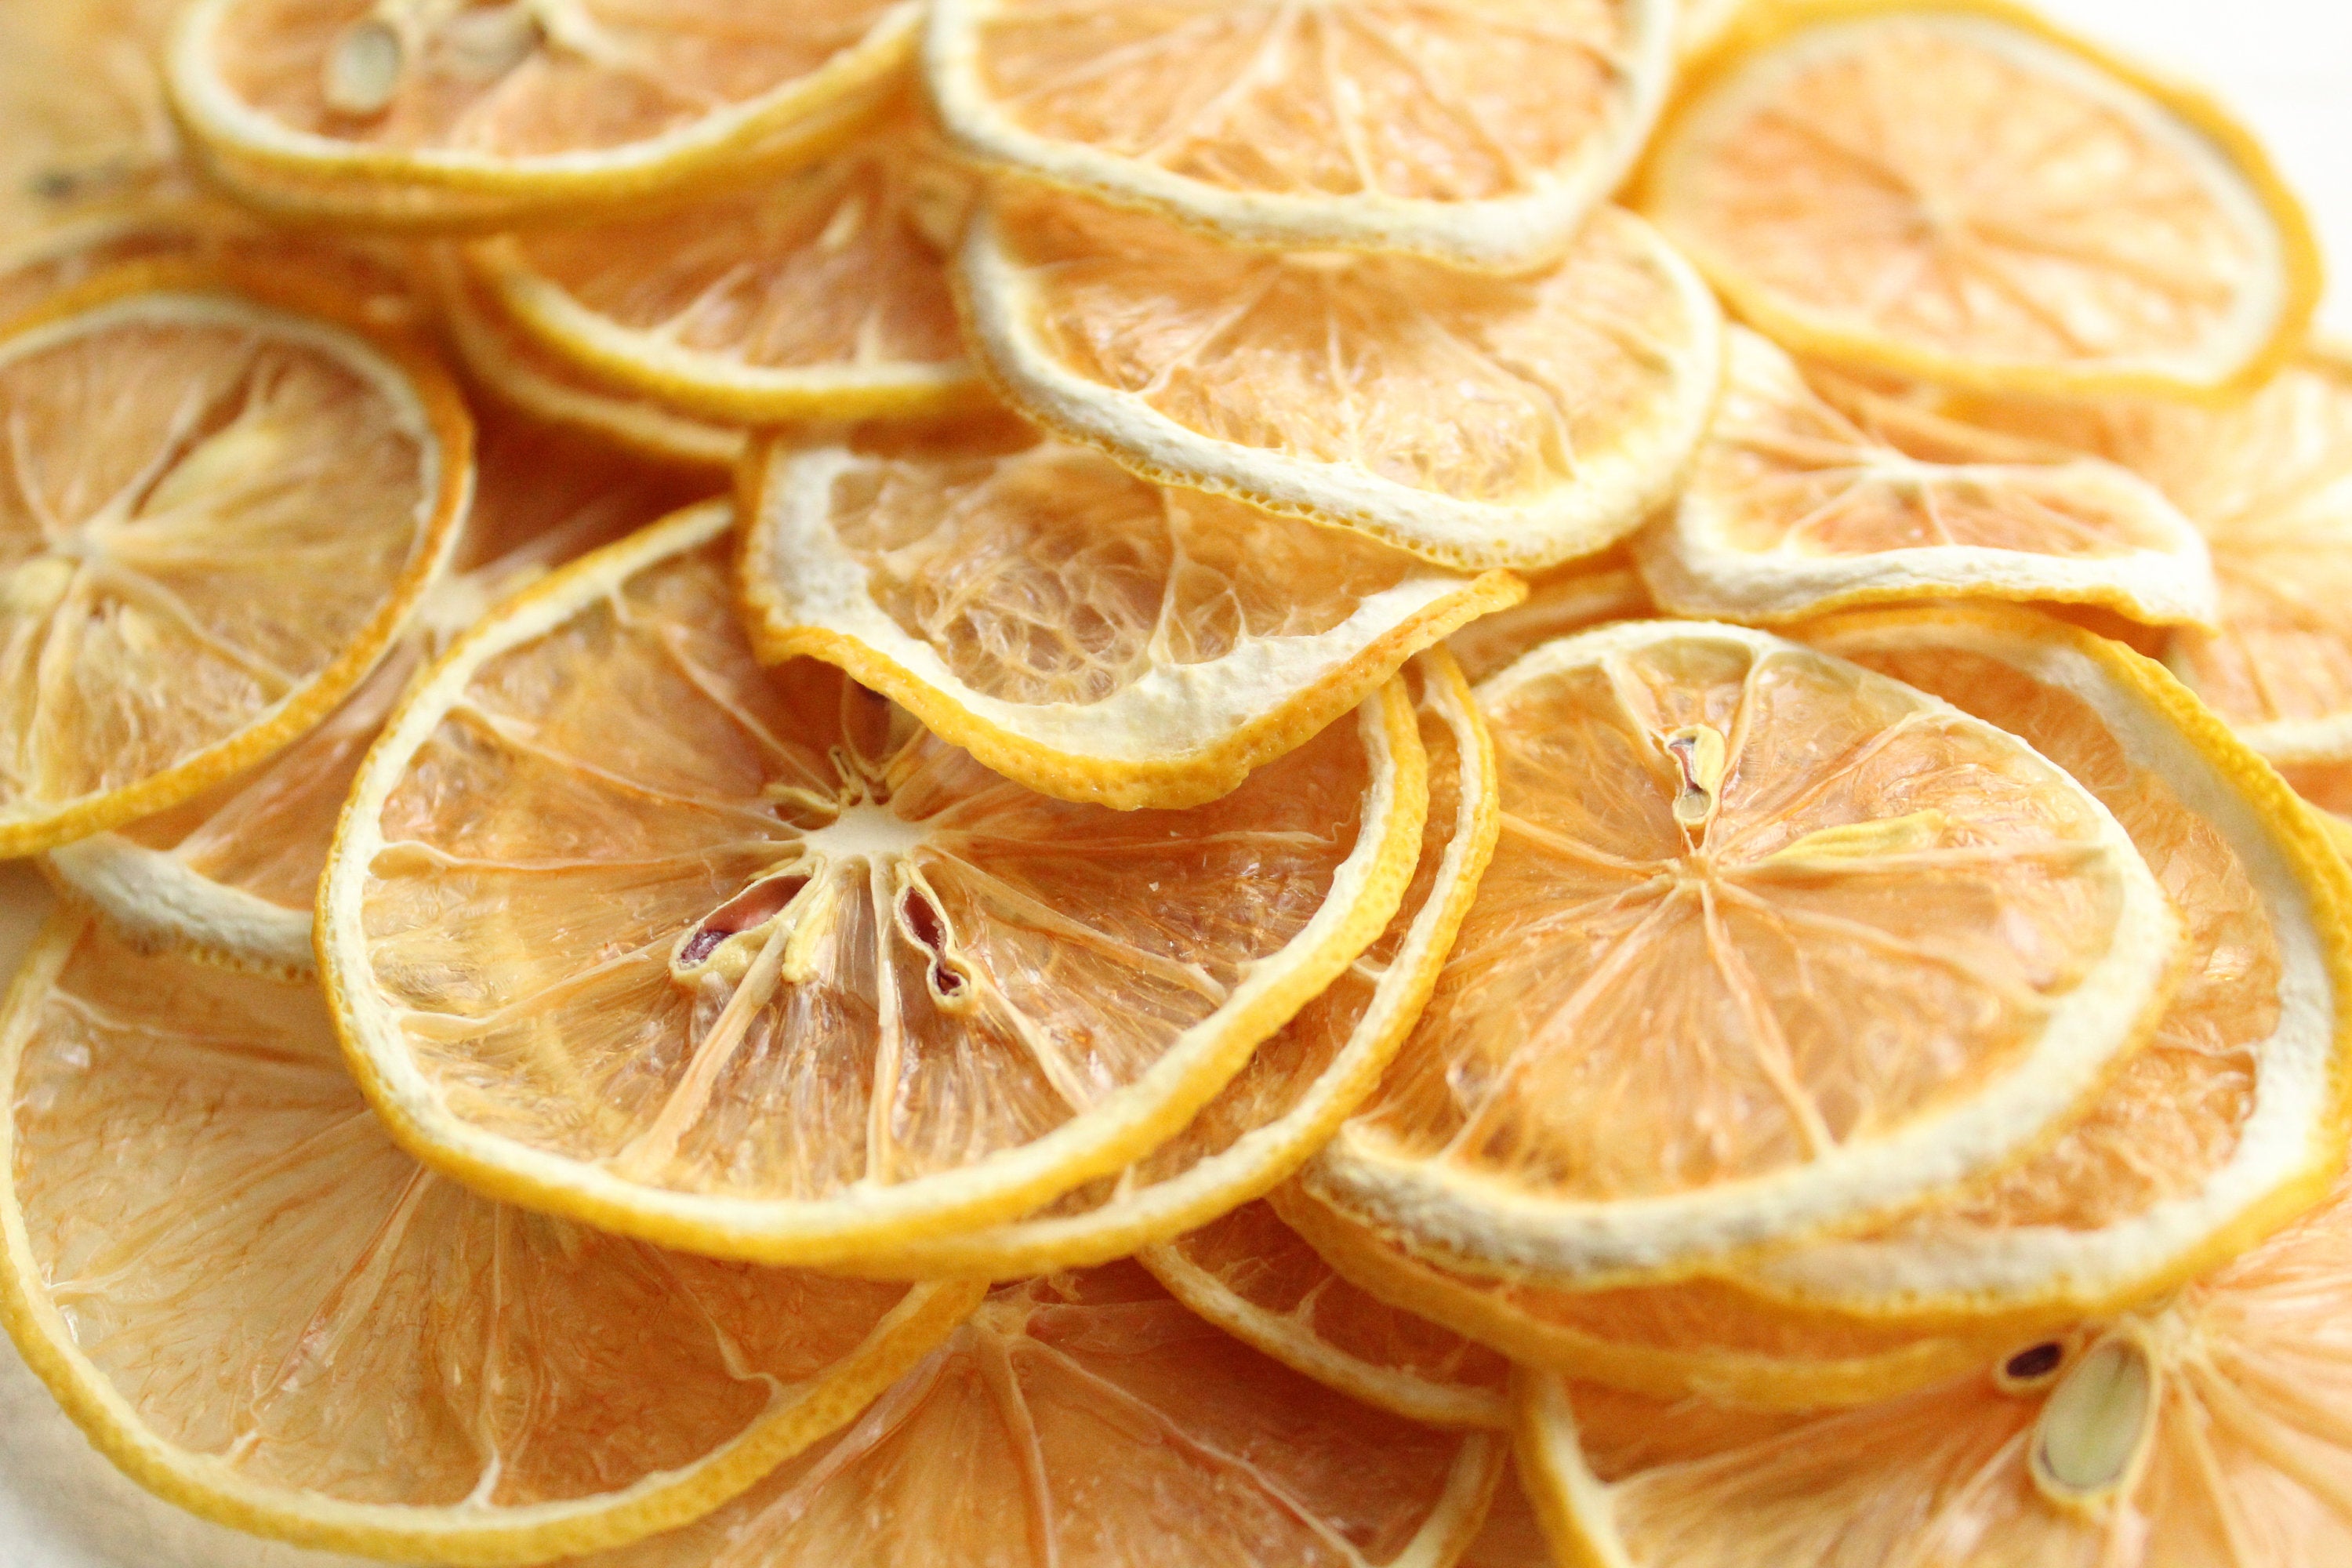 50 Dried fruits. 10 pcs of Each Dried Organic Homemade Grapefruit , Lime, Lemon, Tangerine (Mandarin) and Orange Slices